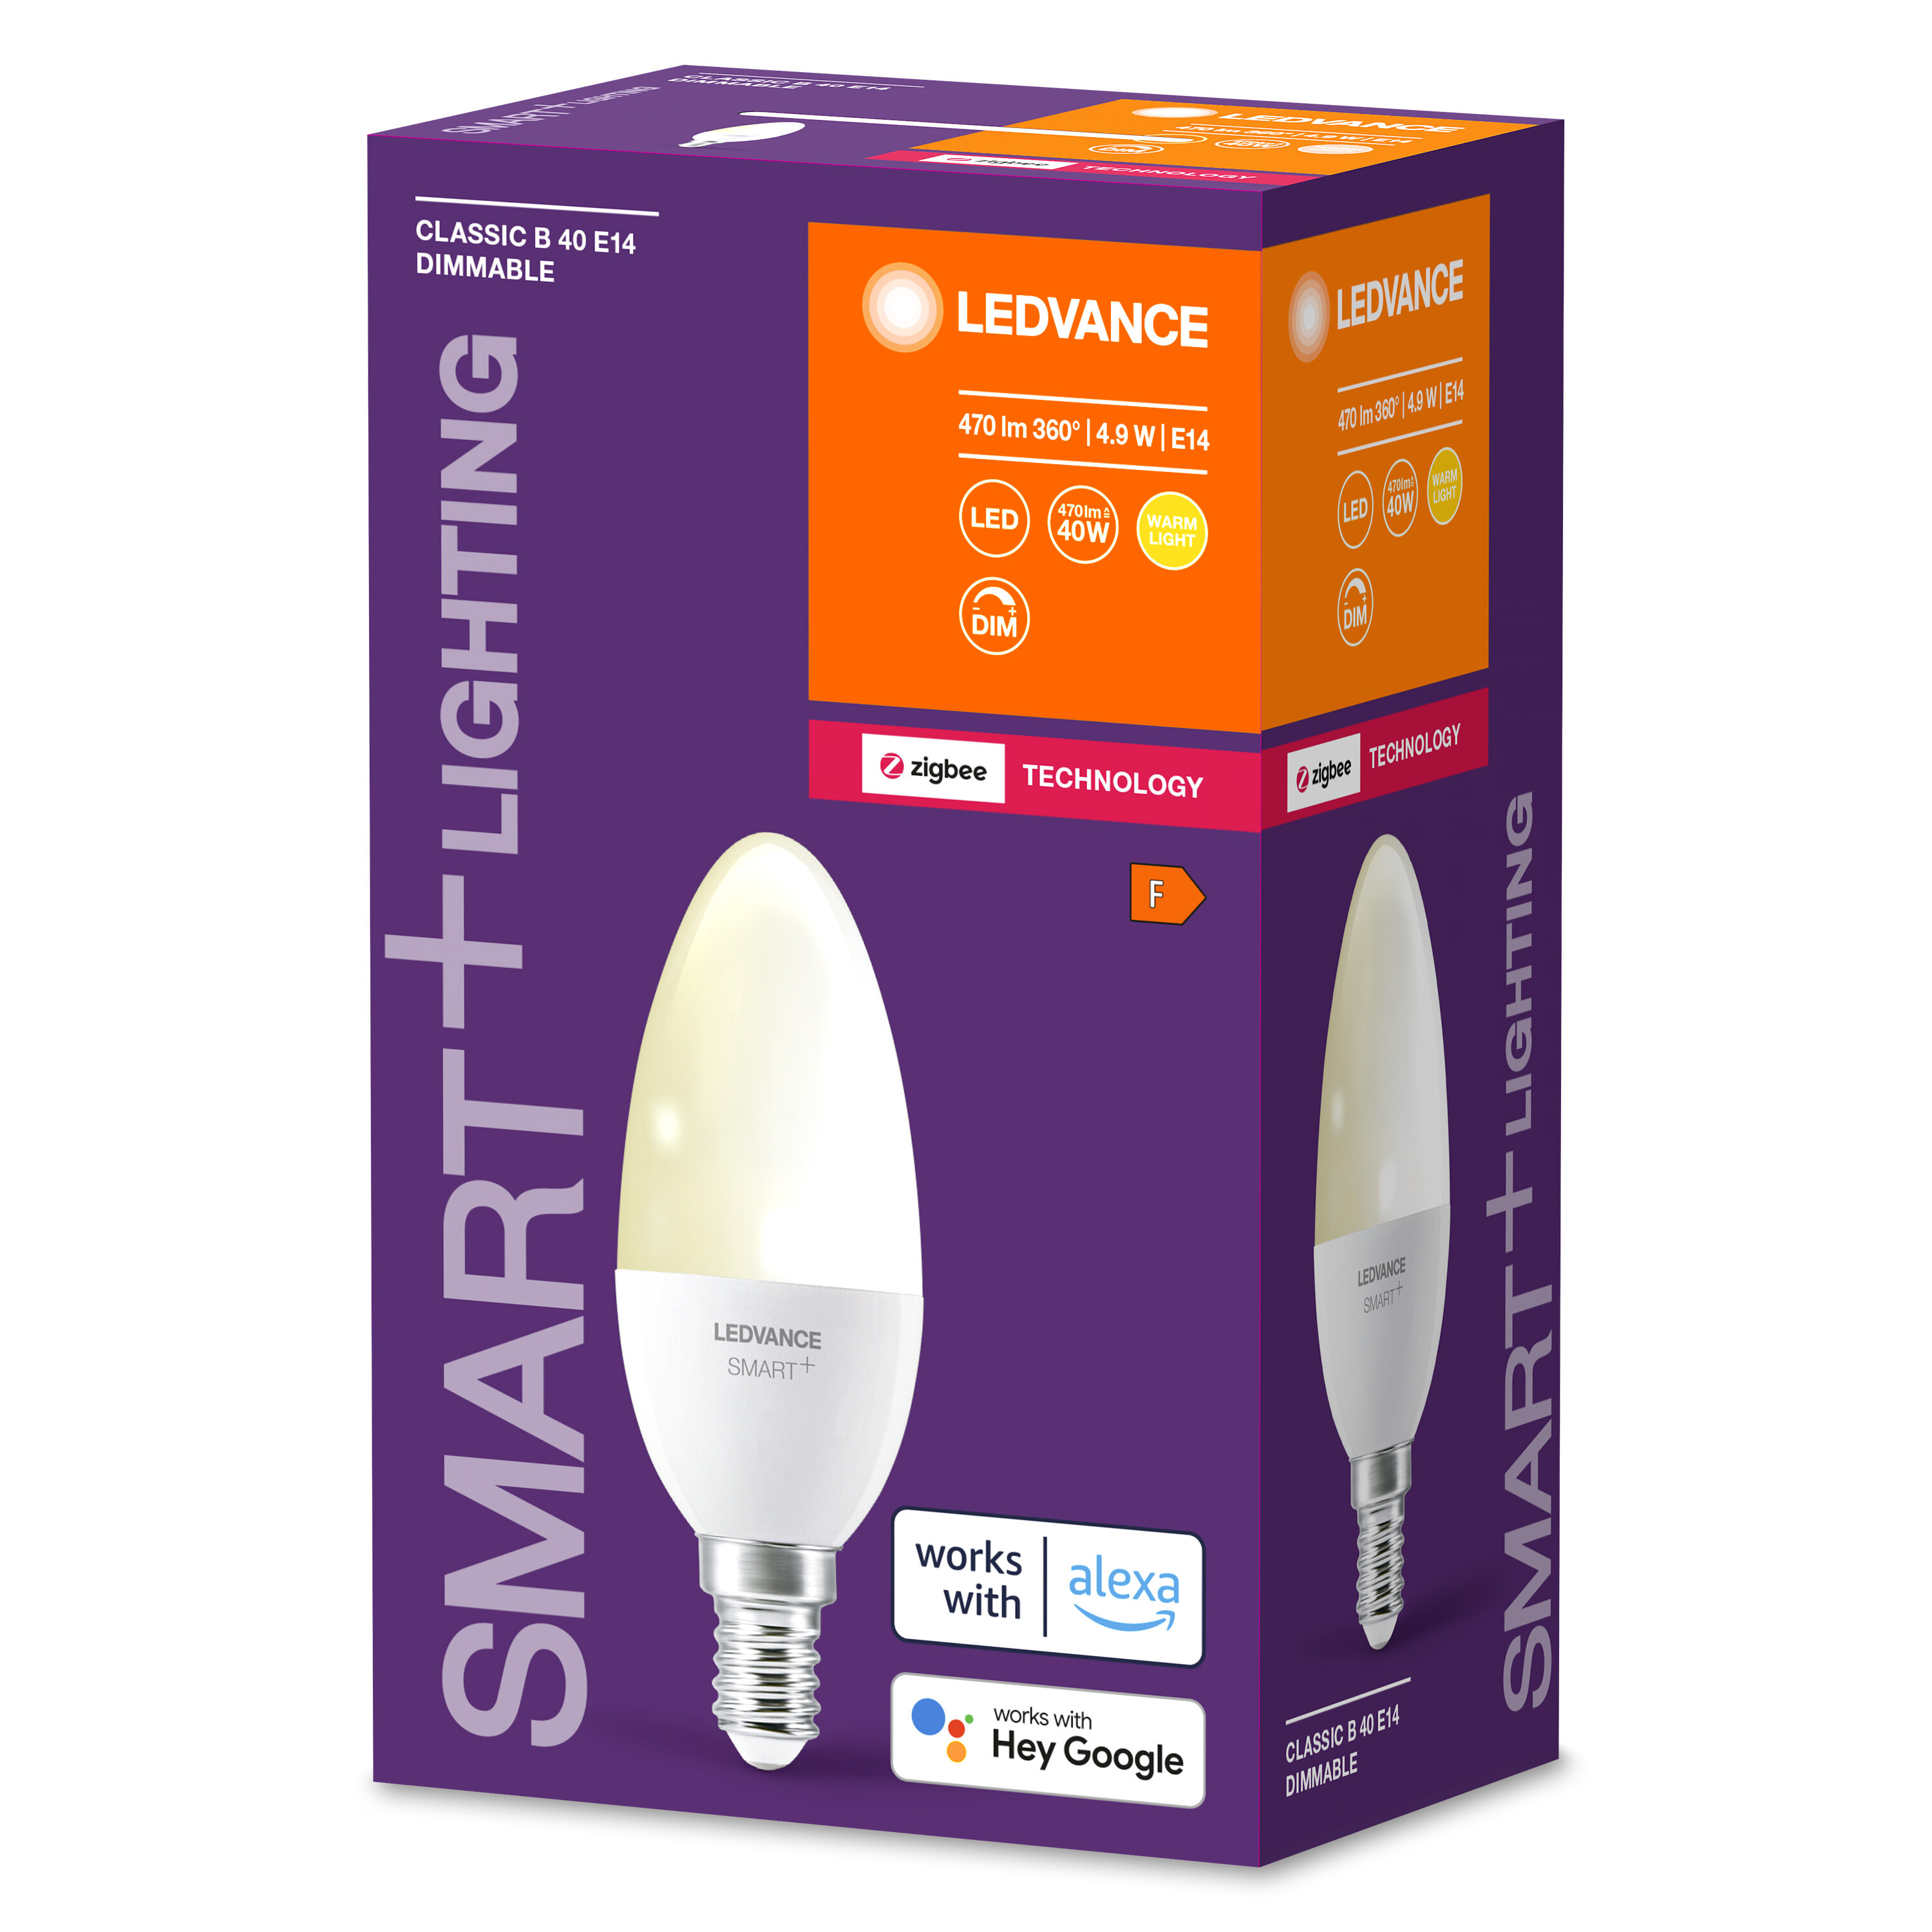 SMART+ Dimmable Smarte LED Warmweiß Classic Lampe LEDVANCE